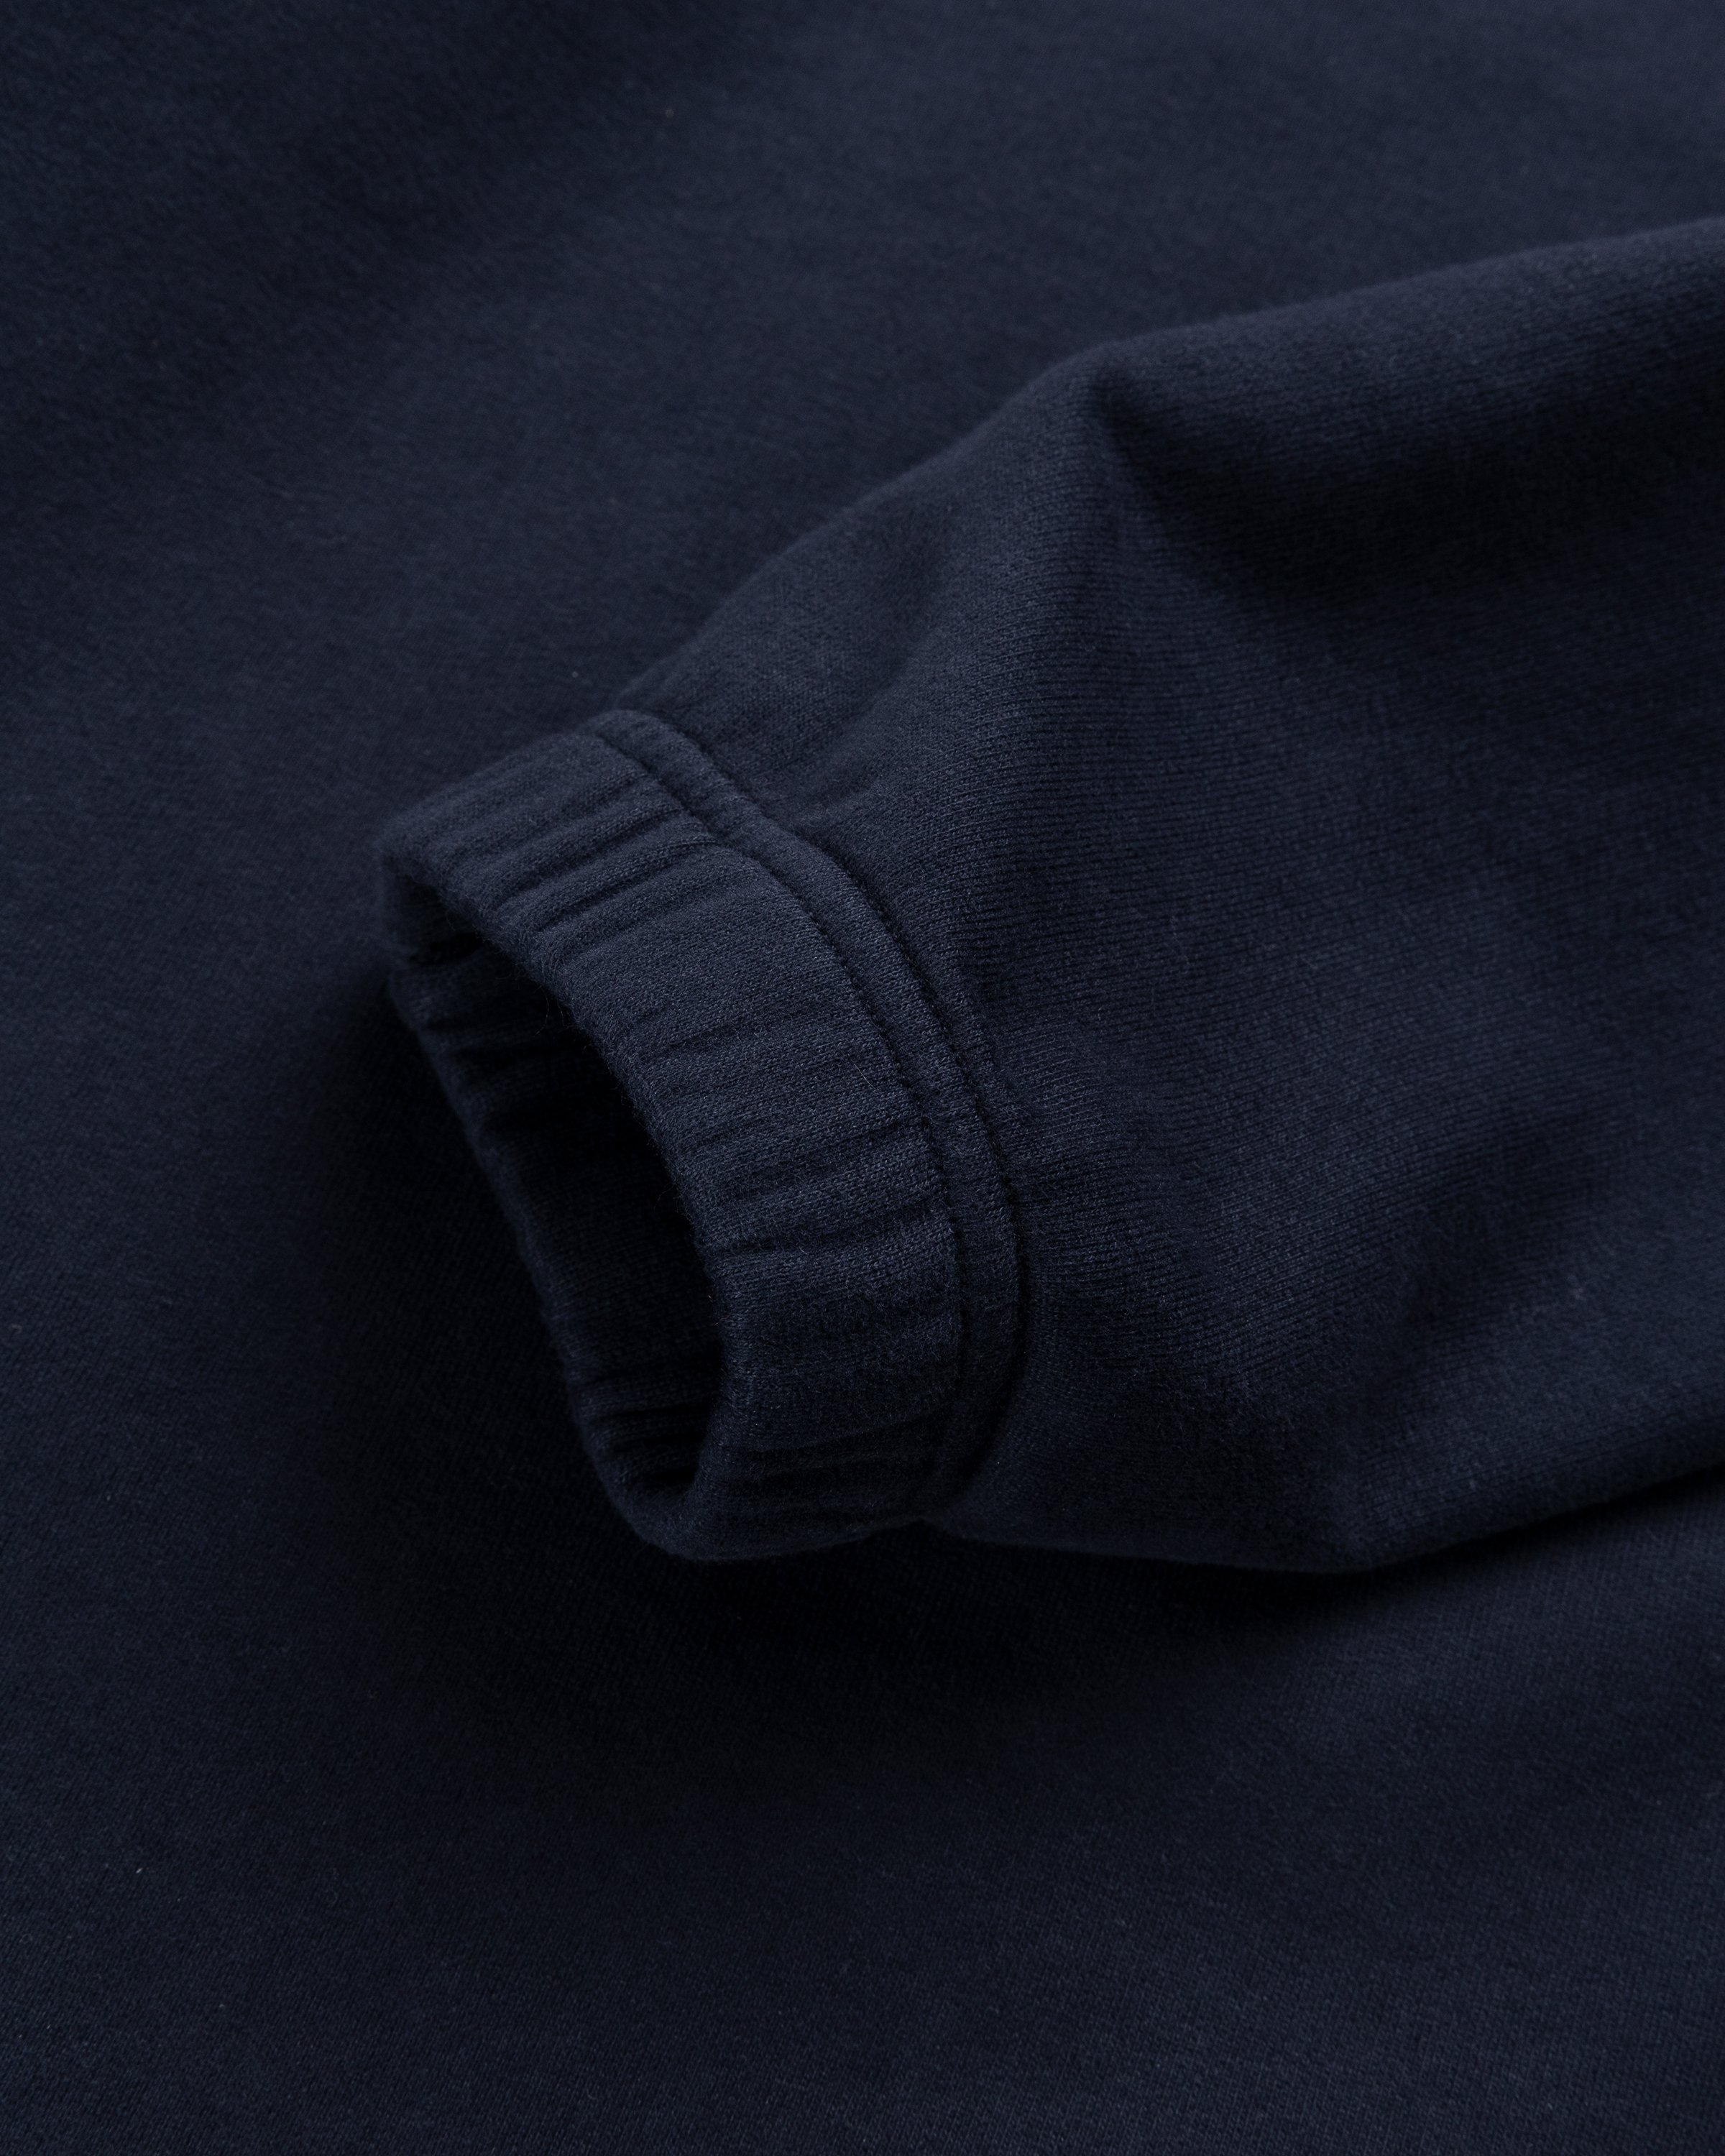 Stone Island - Garment-Dyed Fleece Crewneck Sweatshirt Navy Blue - Clothing - Blue - Image 5